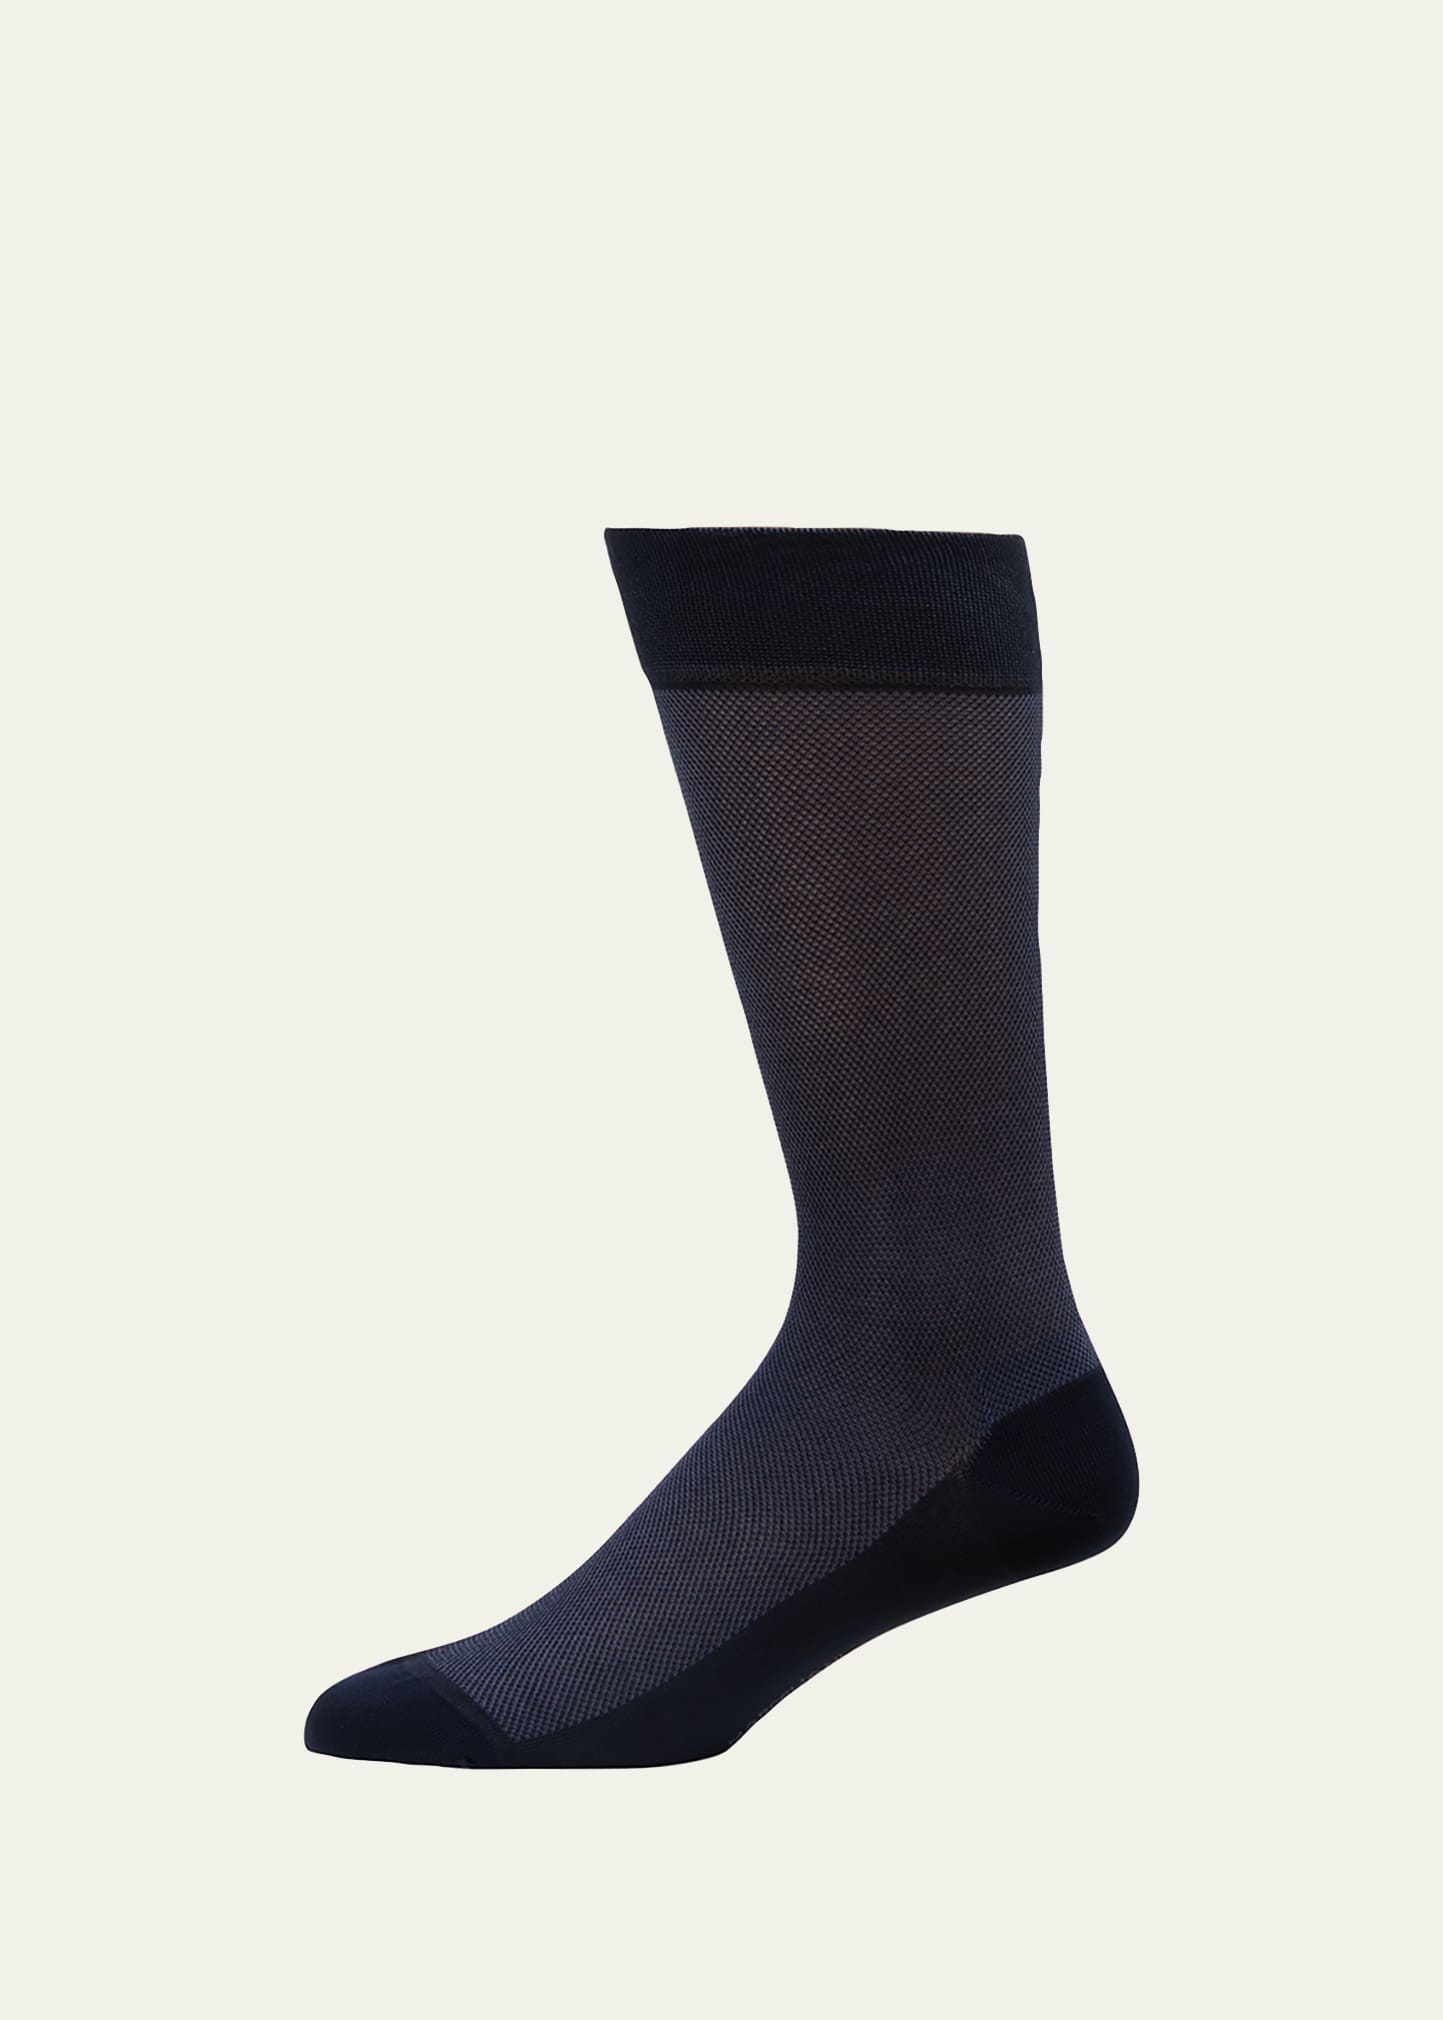 Marcoliani Men's Modal Pique Mid-Calf Socks